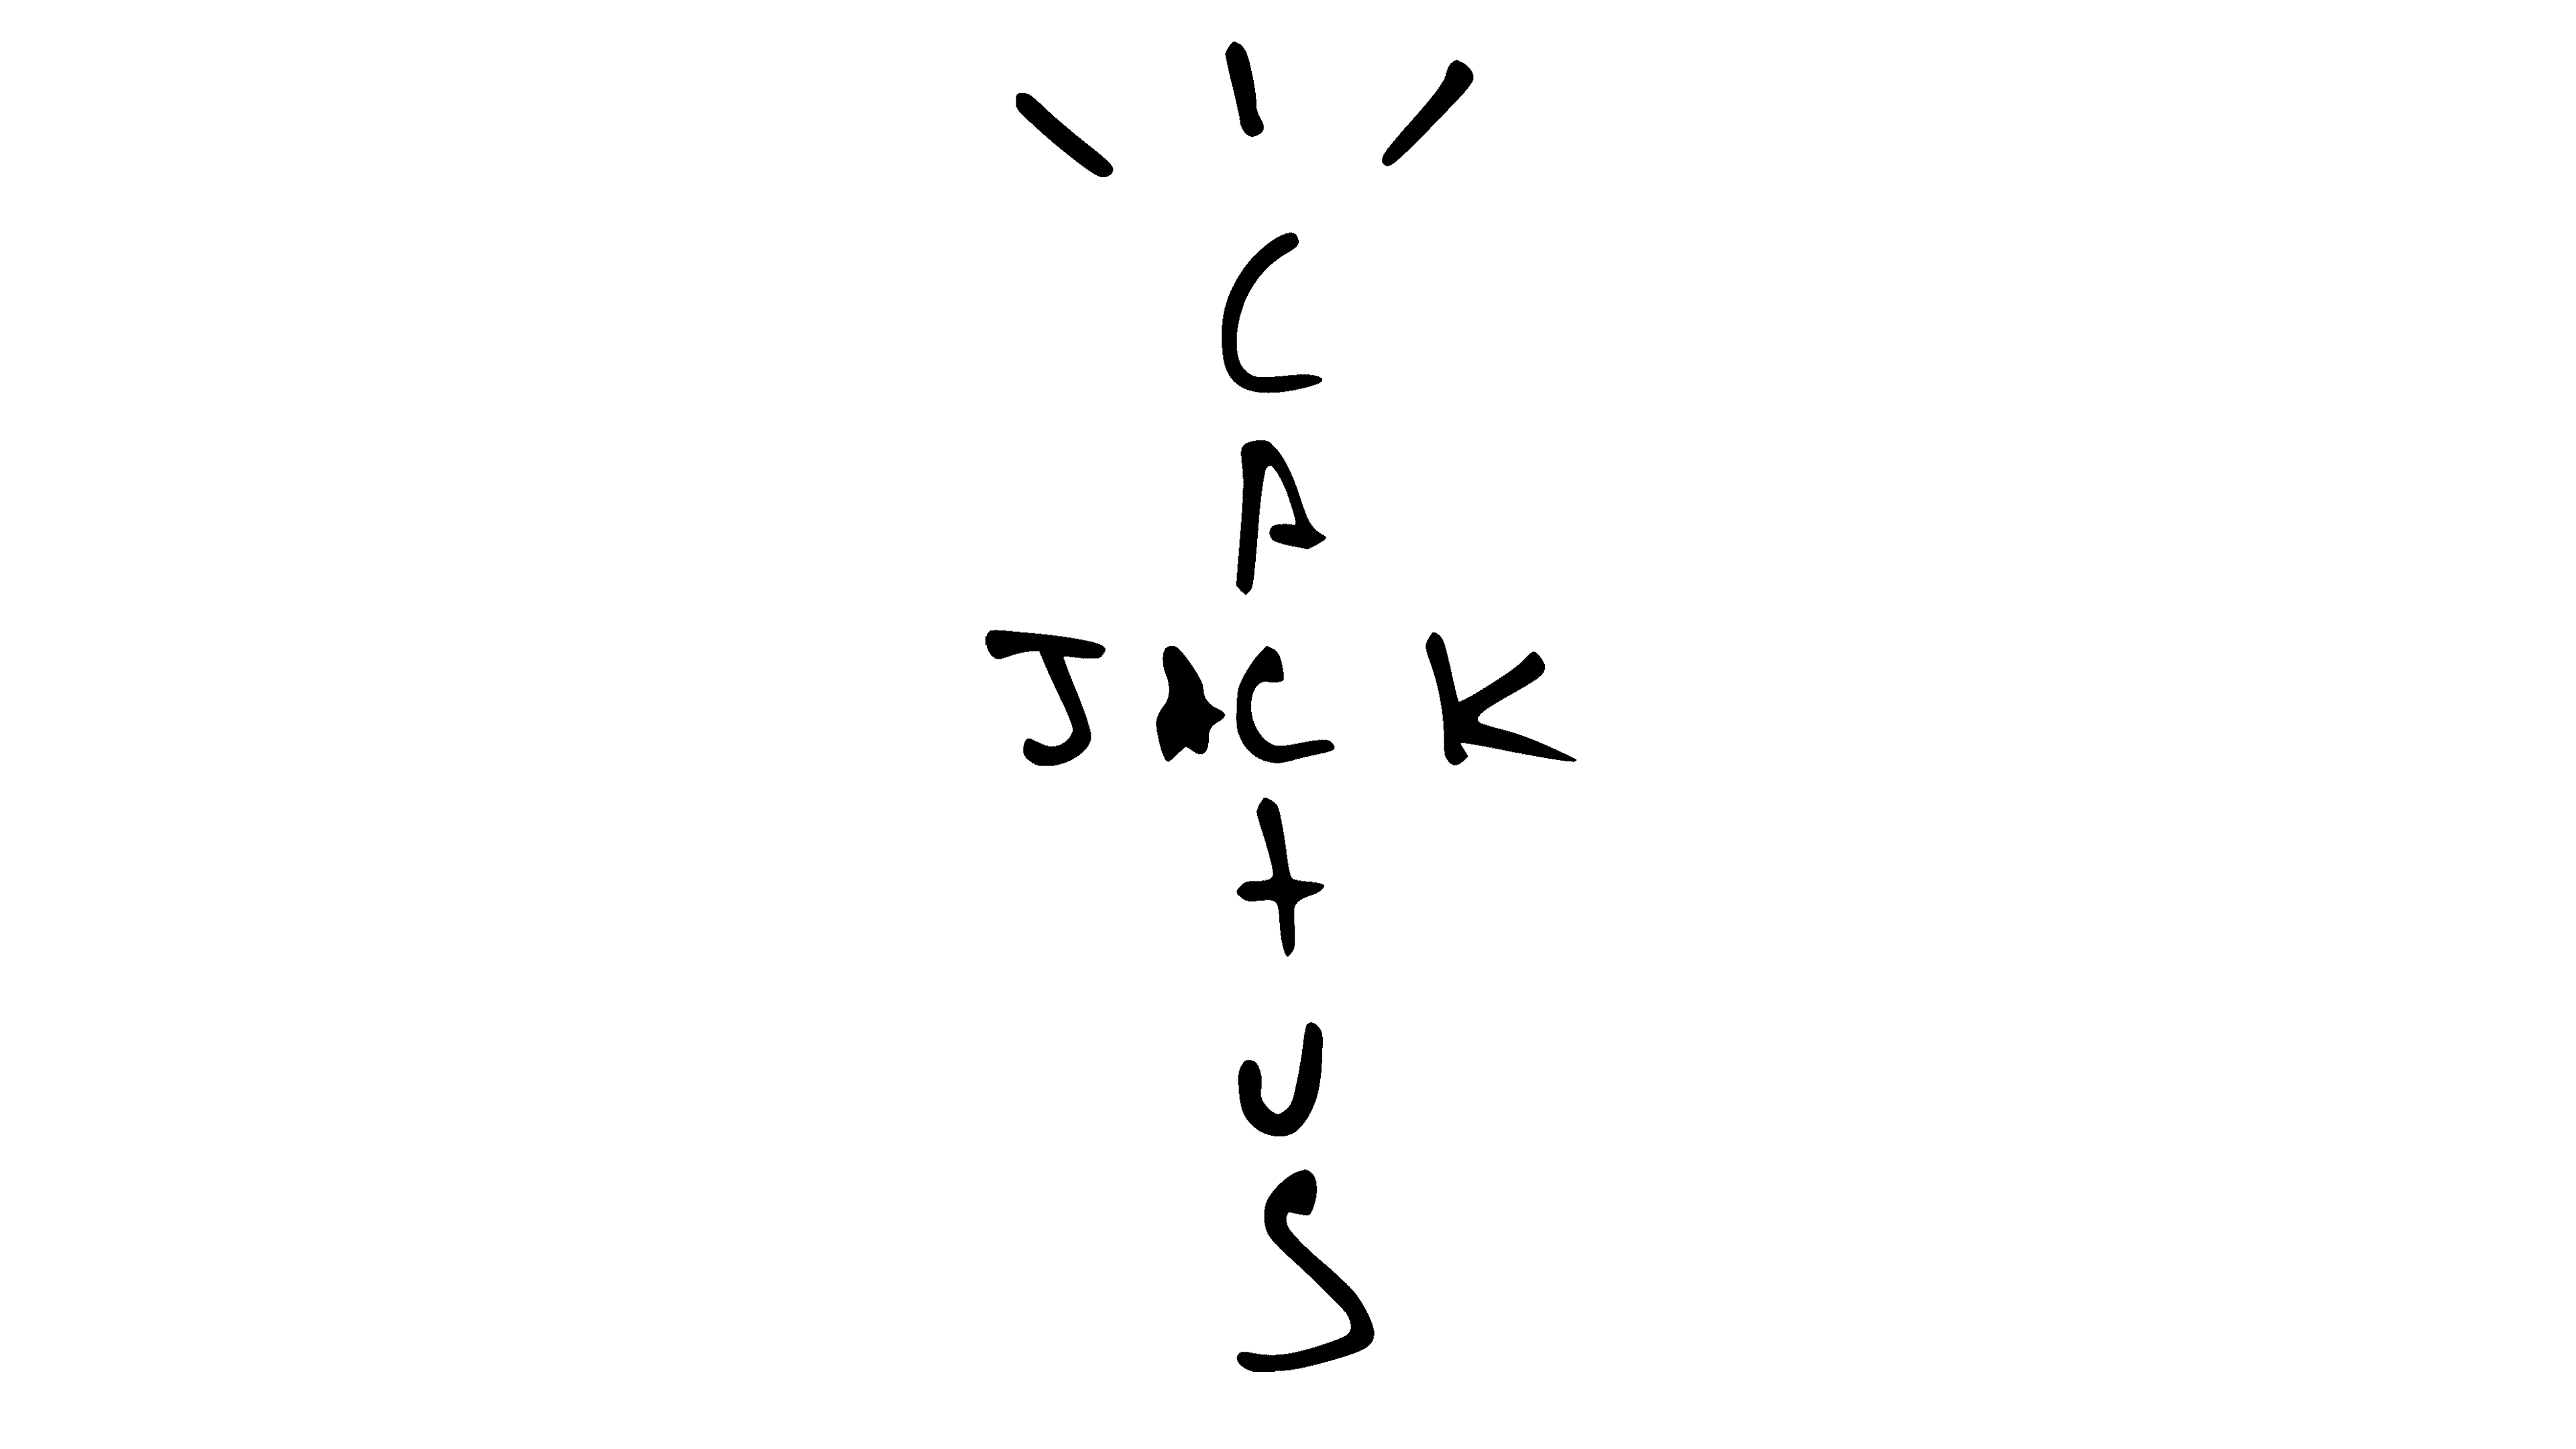 Download Cactus Jack Travis Scott Face Logo Brown Aesthetic Wallpaper |  Wallpapers.com